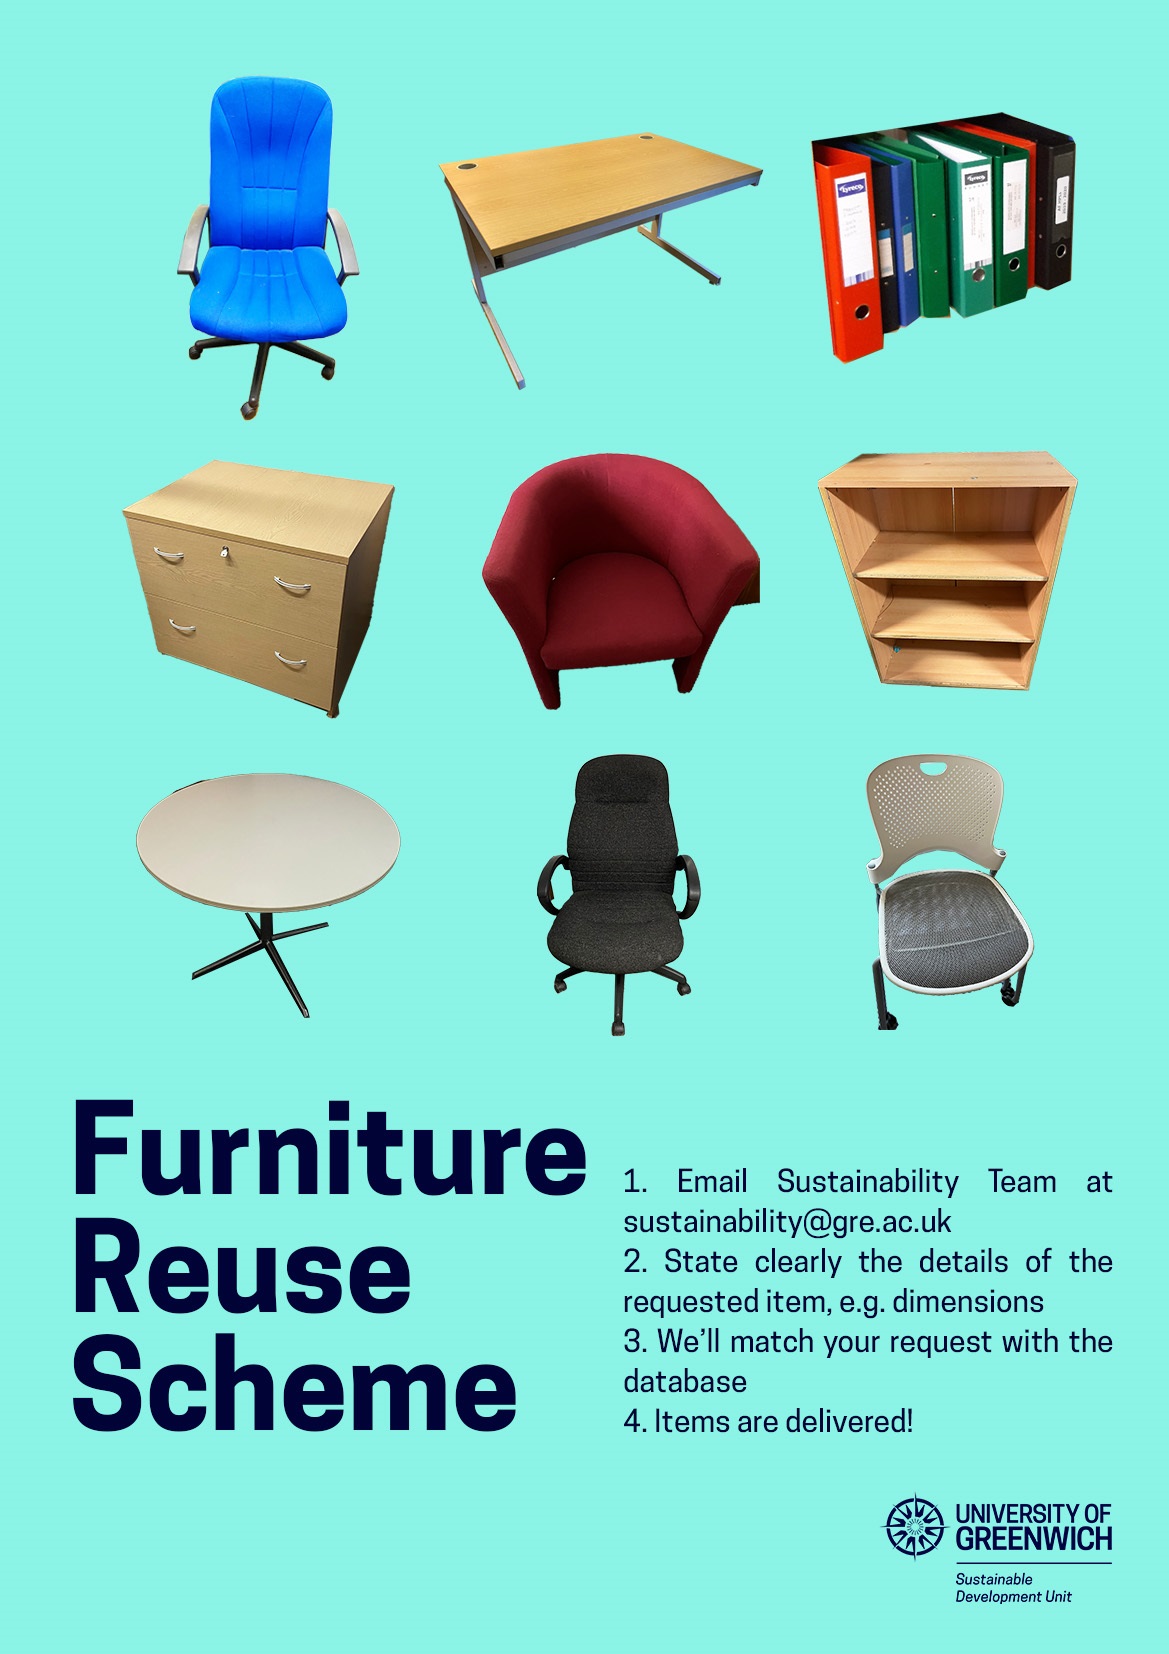 Furniture reuse scheme